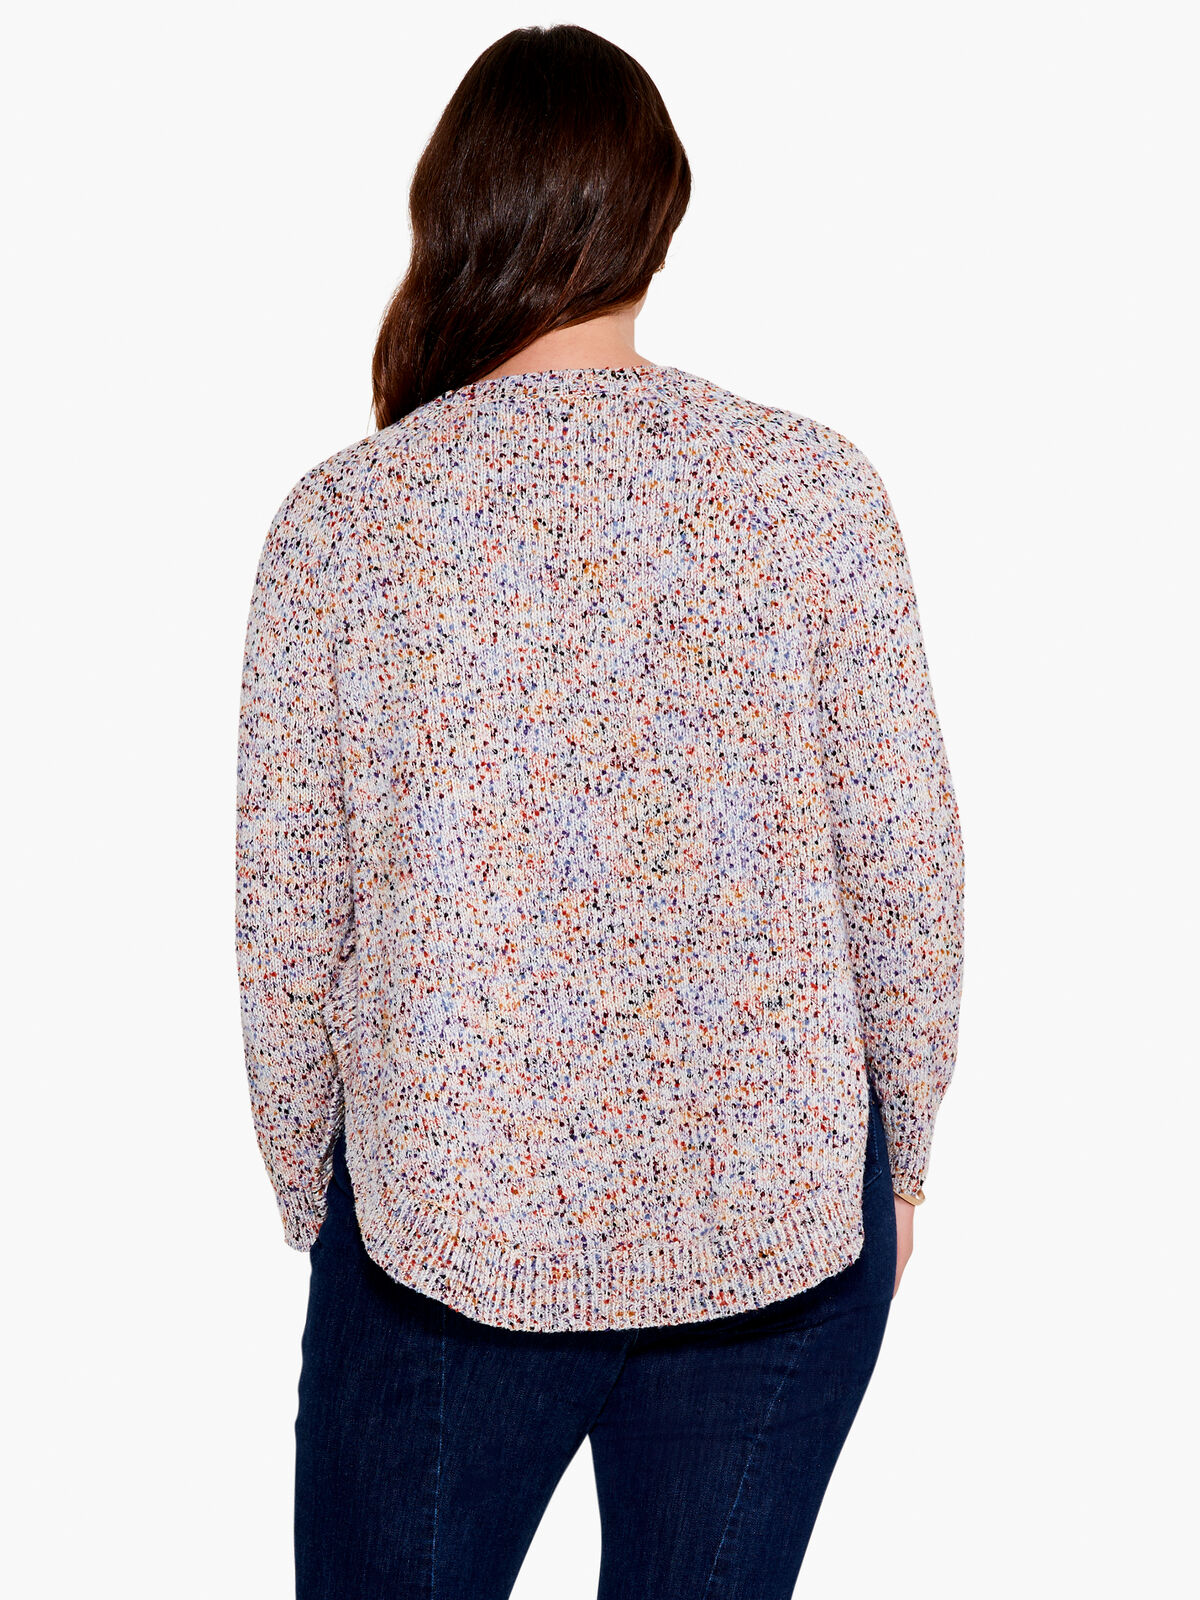 Speckled Sunrise Sweater